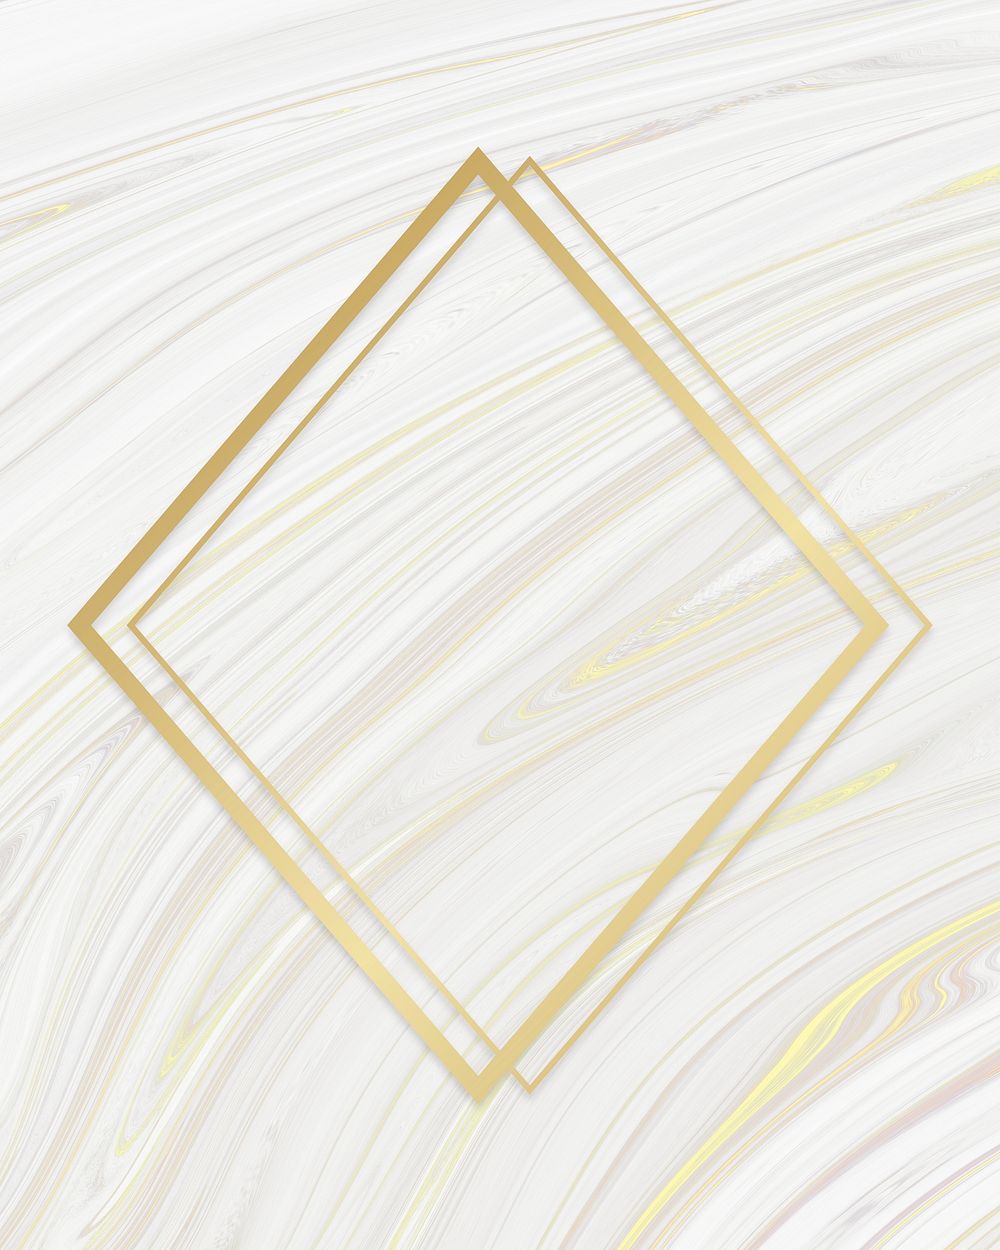 Golden framed rhombus on a liquid marble texture